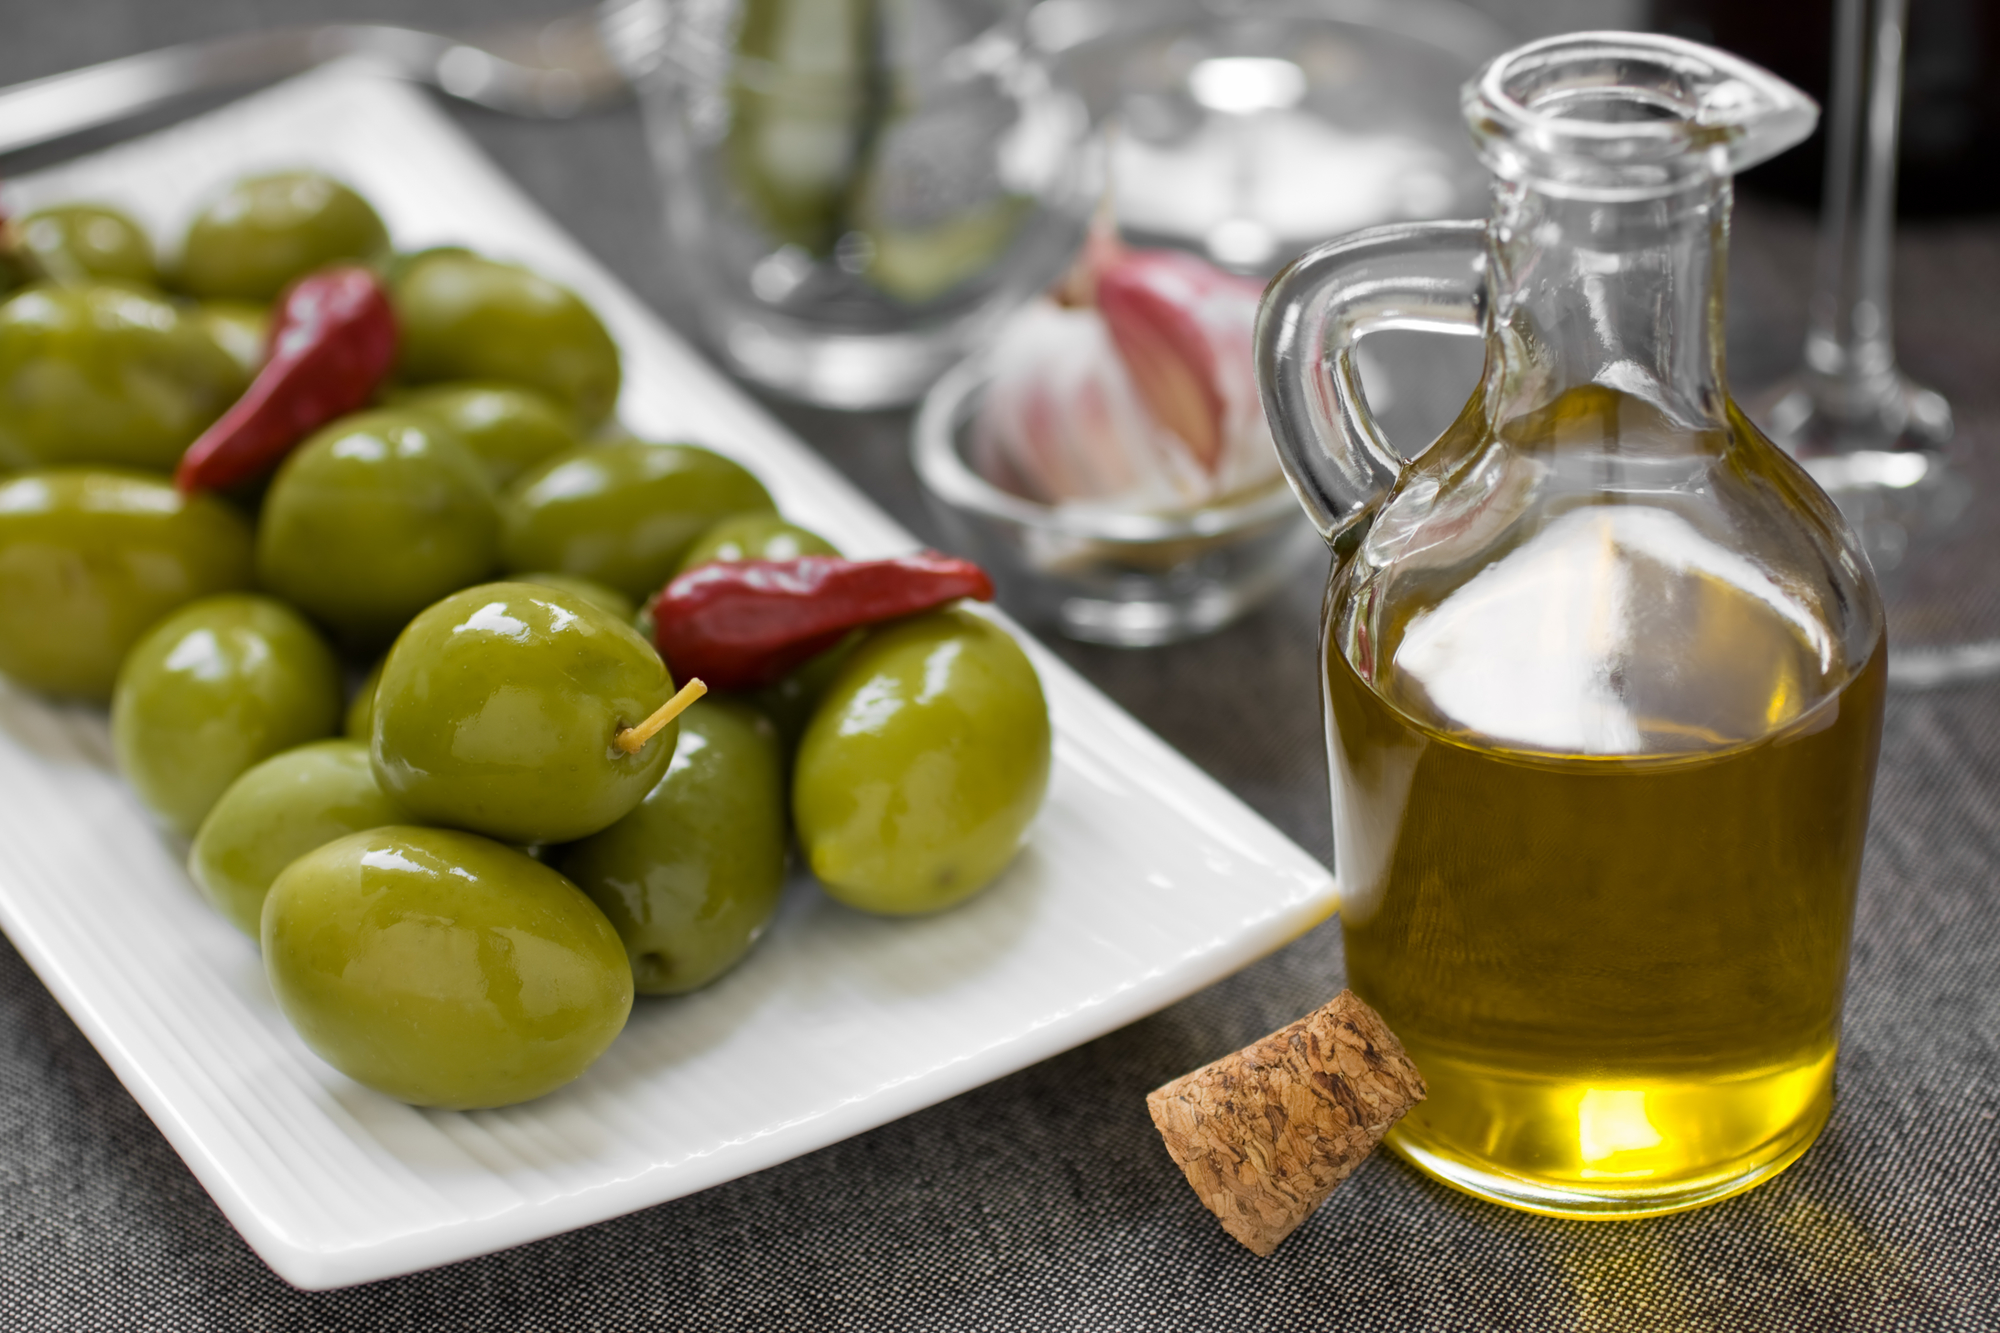 Greek olive oil